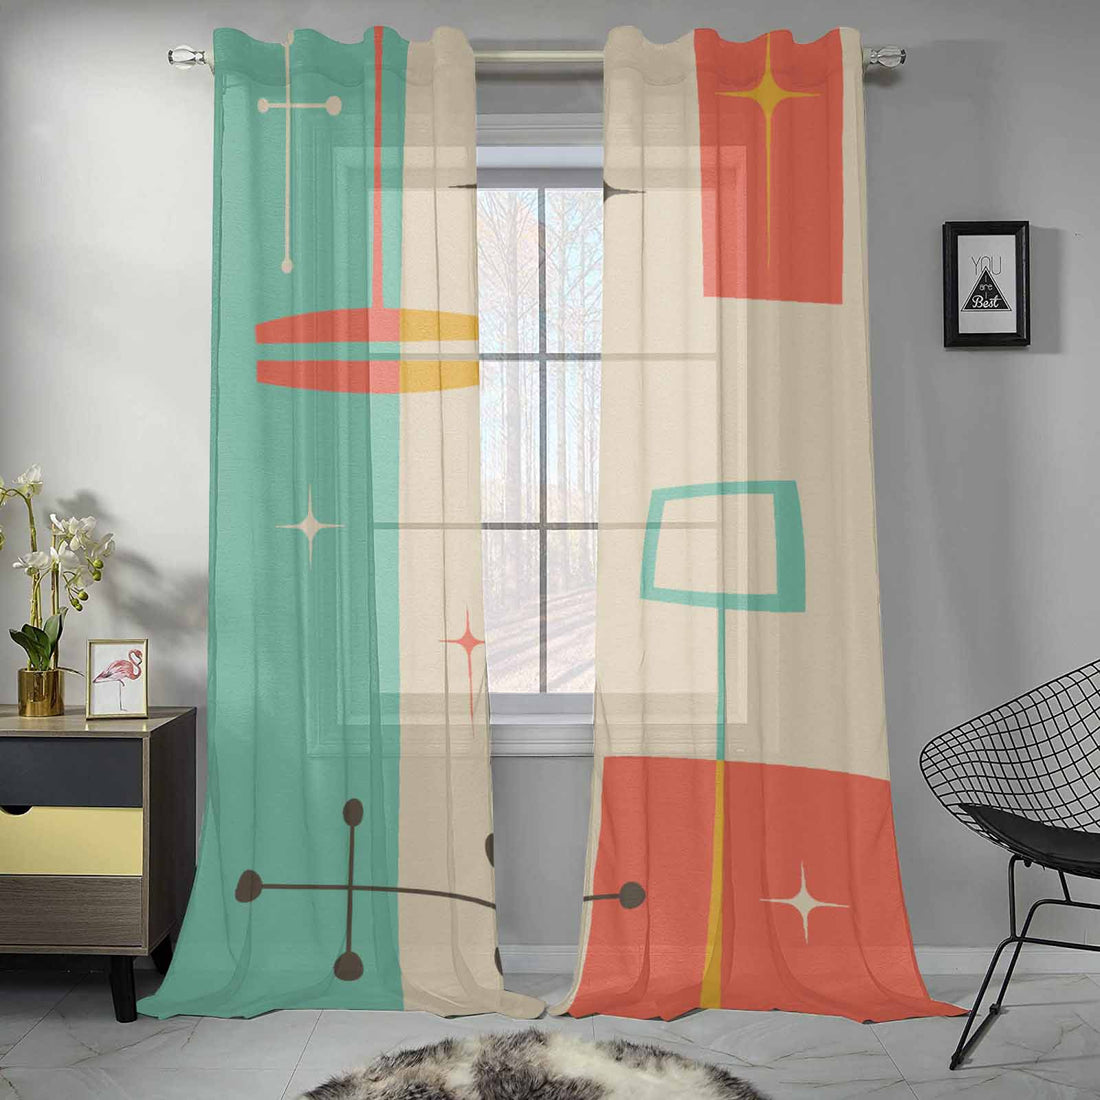 Kate McEnroe New York Sheer 2 - Panel Window Curtains in Mid Century Modern Geometric Abstract PrintWindow CurtainsDG1086392DXH7858D